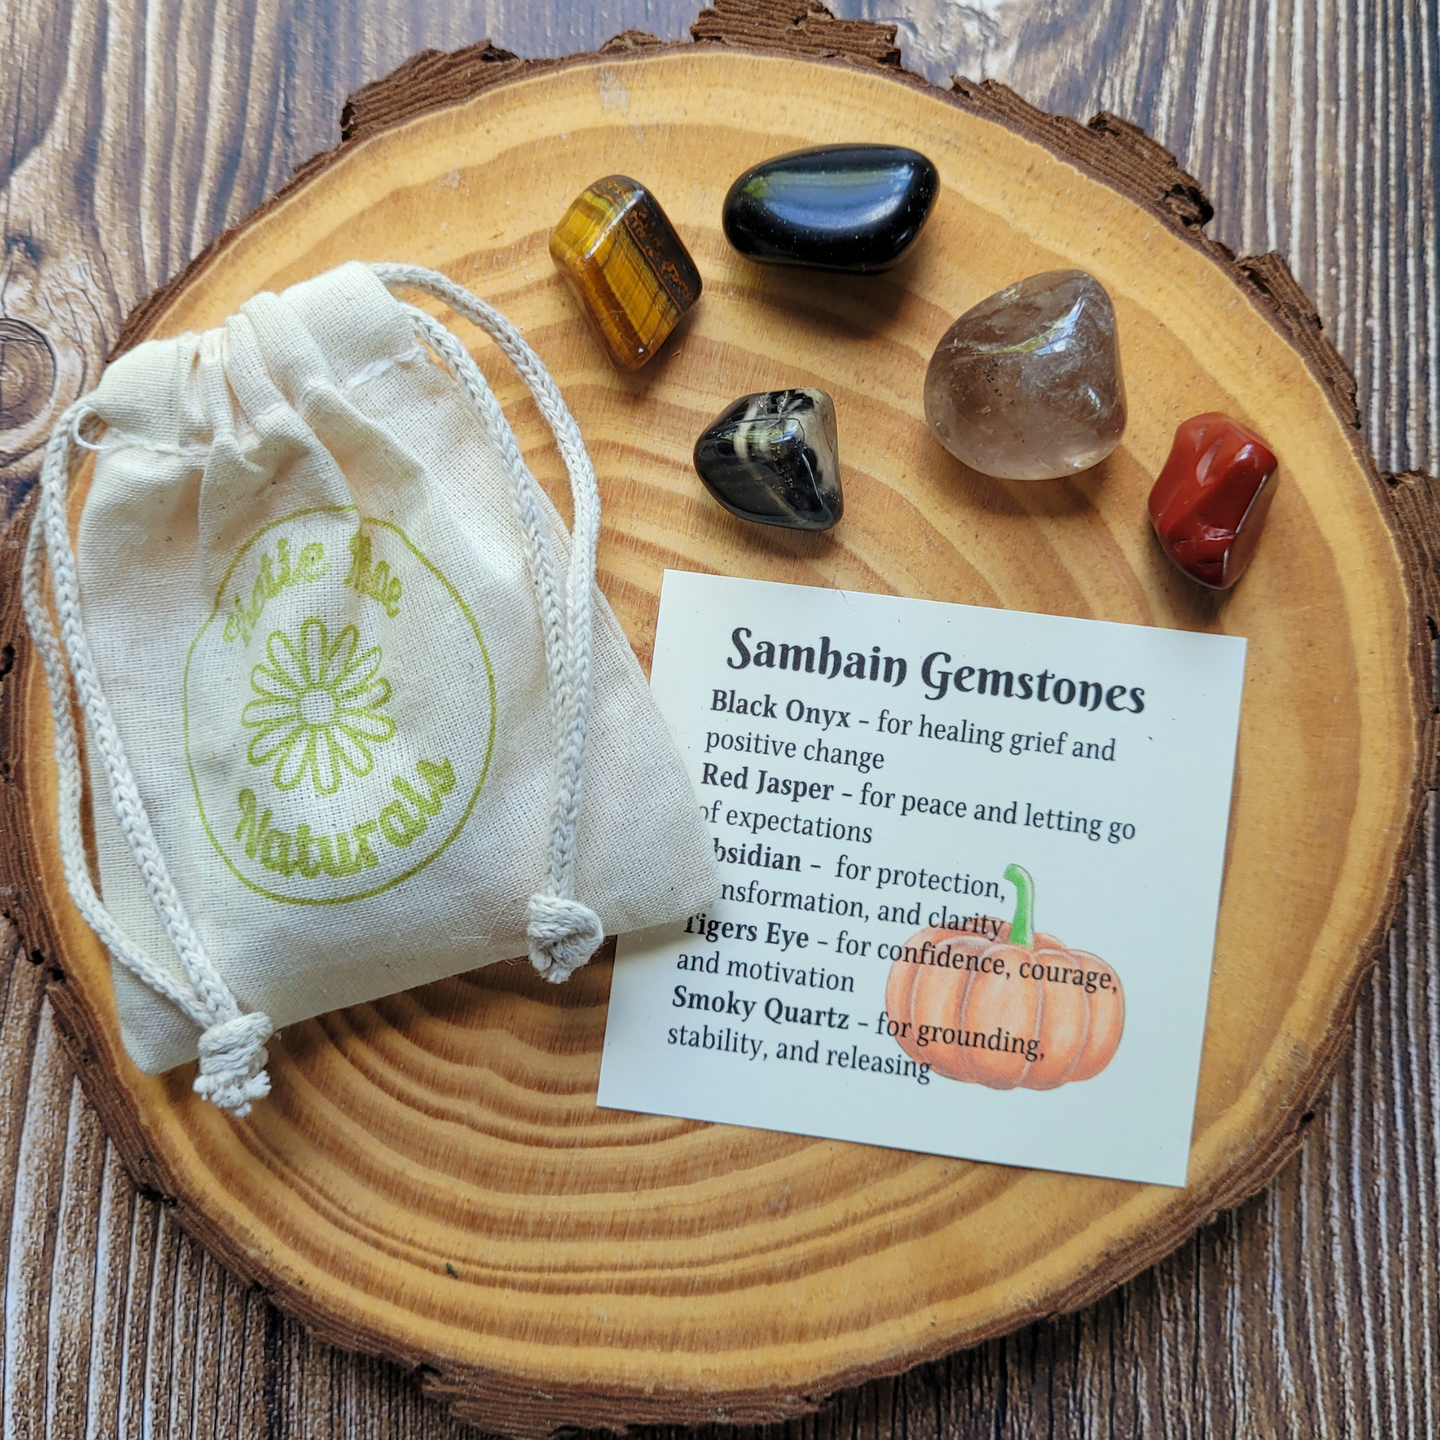 Samhain gemstone set with 5 stones